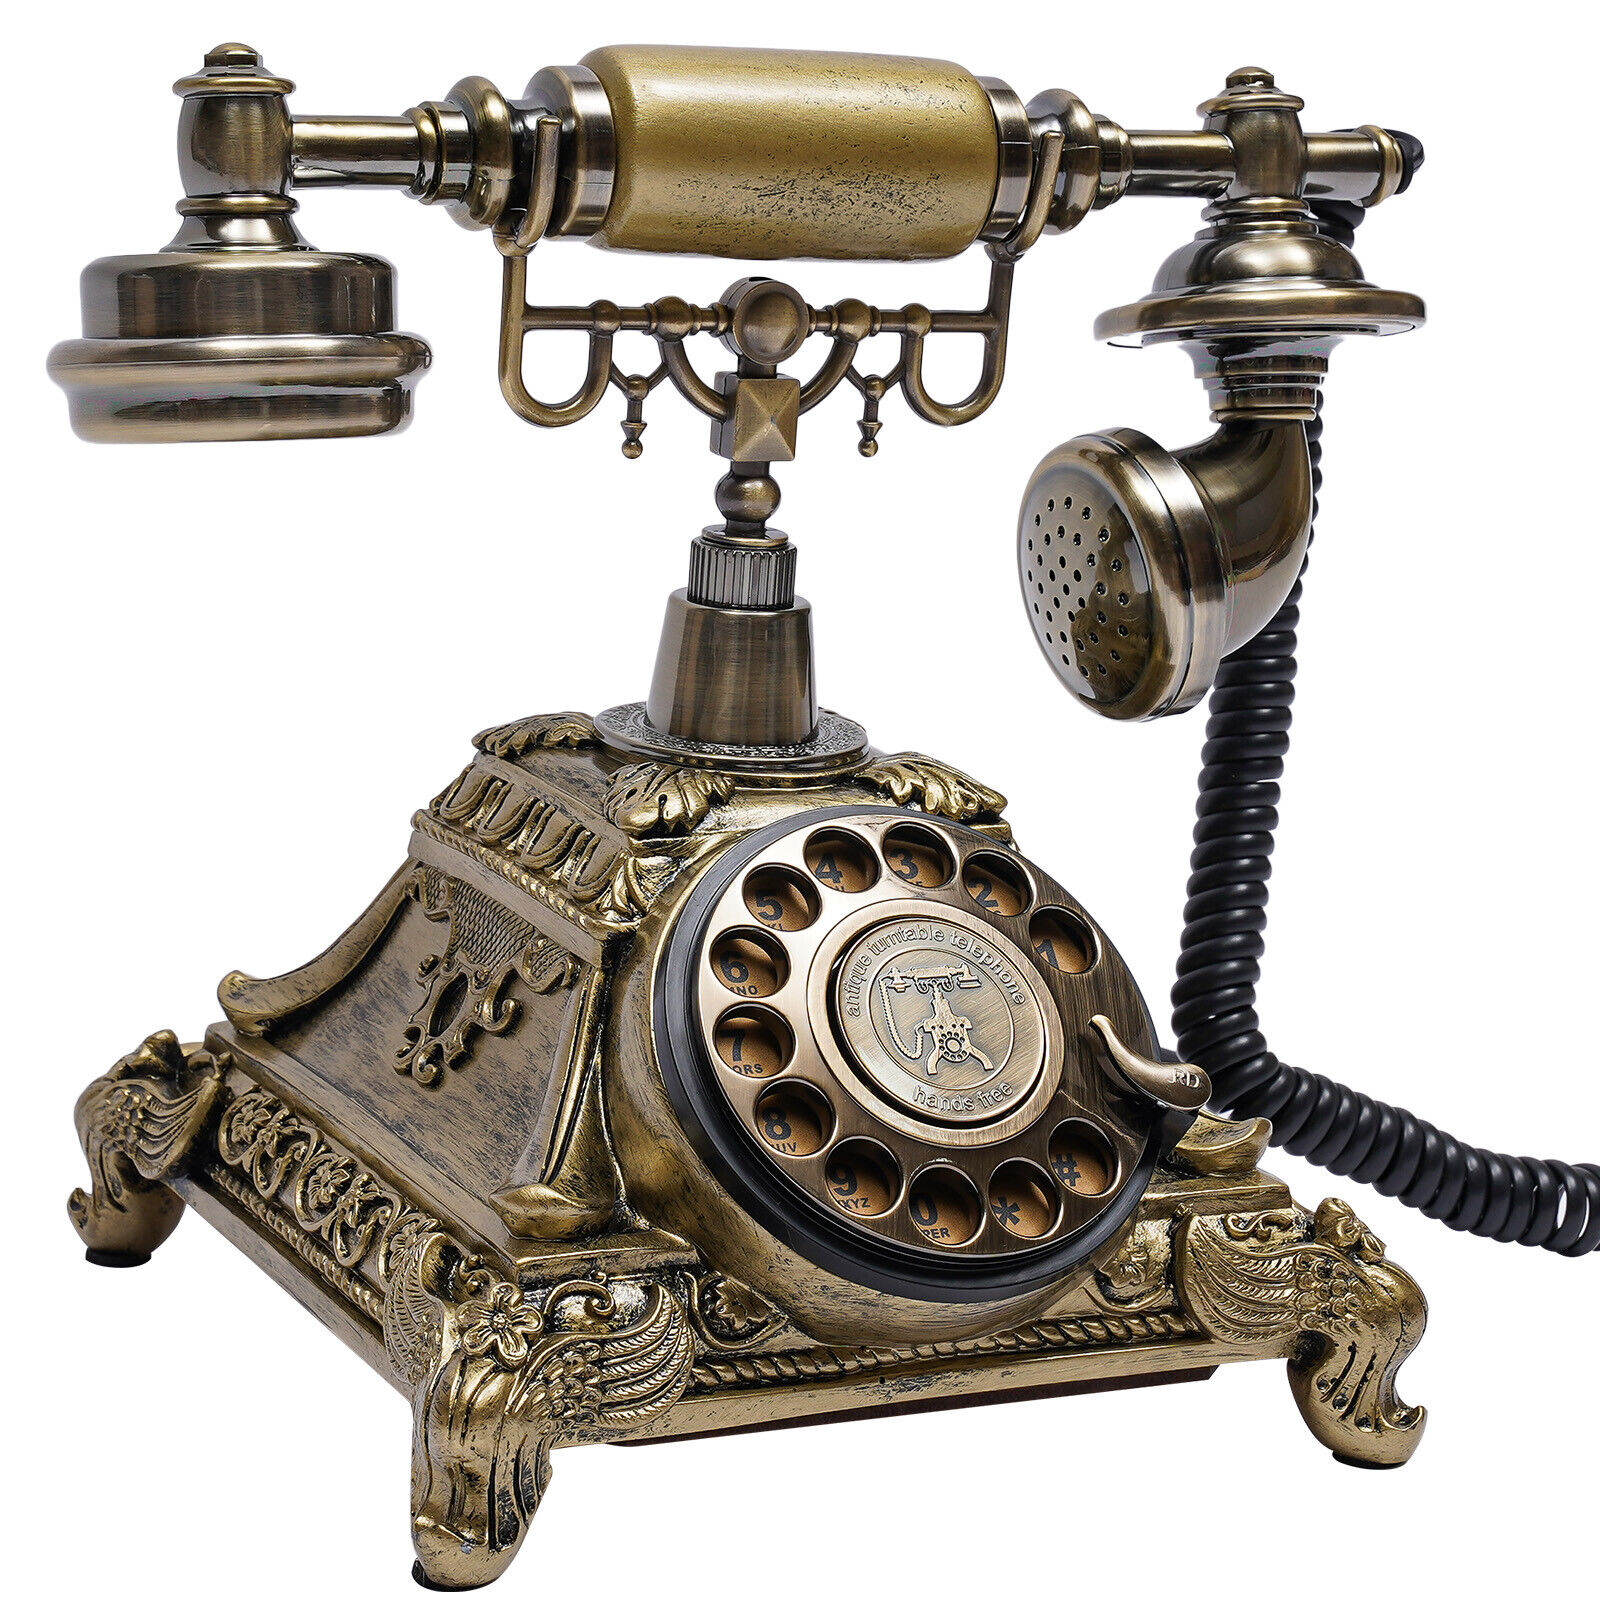 Vintage Retro Corded Telephone Home Office Desk Landline Phone Equipment New Unbranded Does not apply - фотография #11